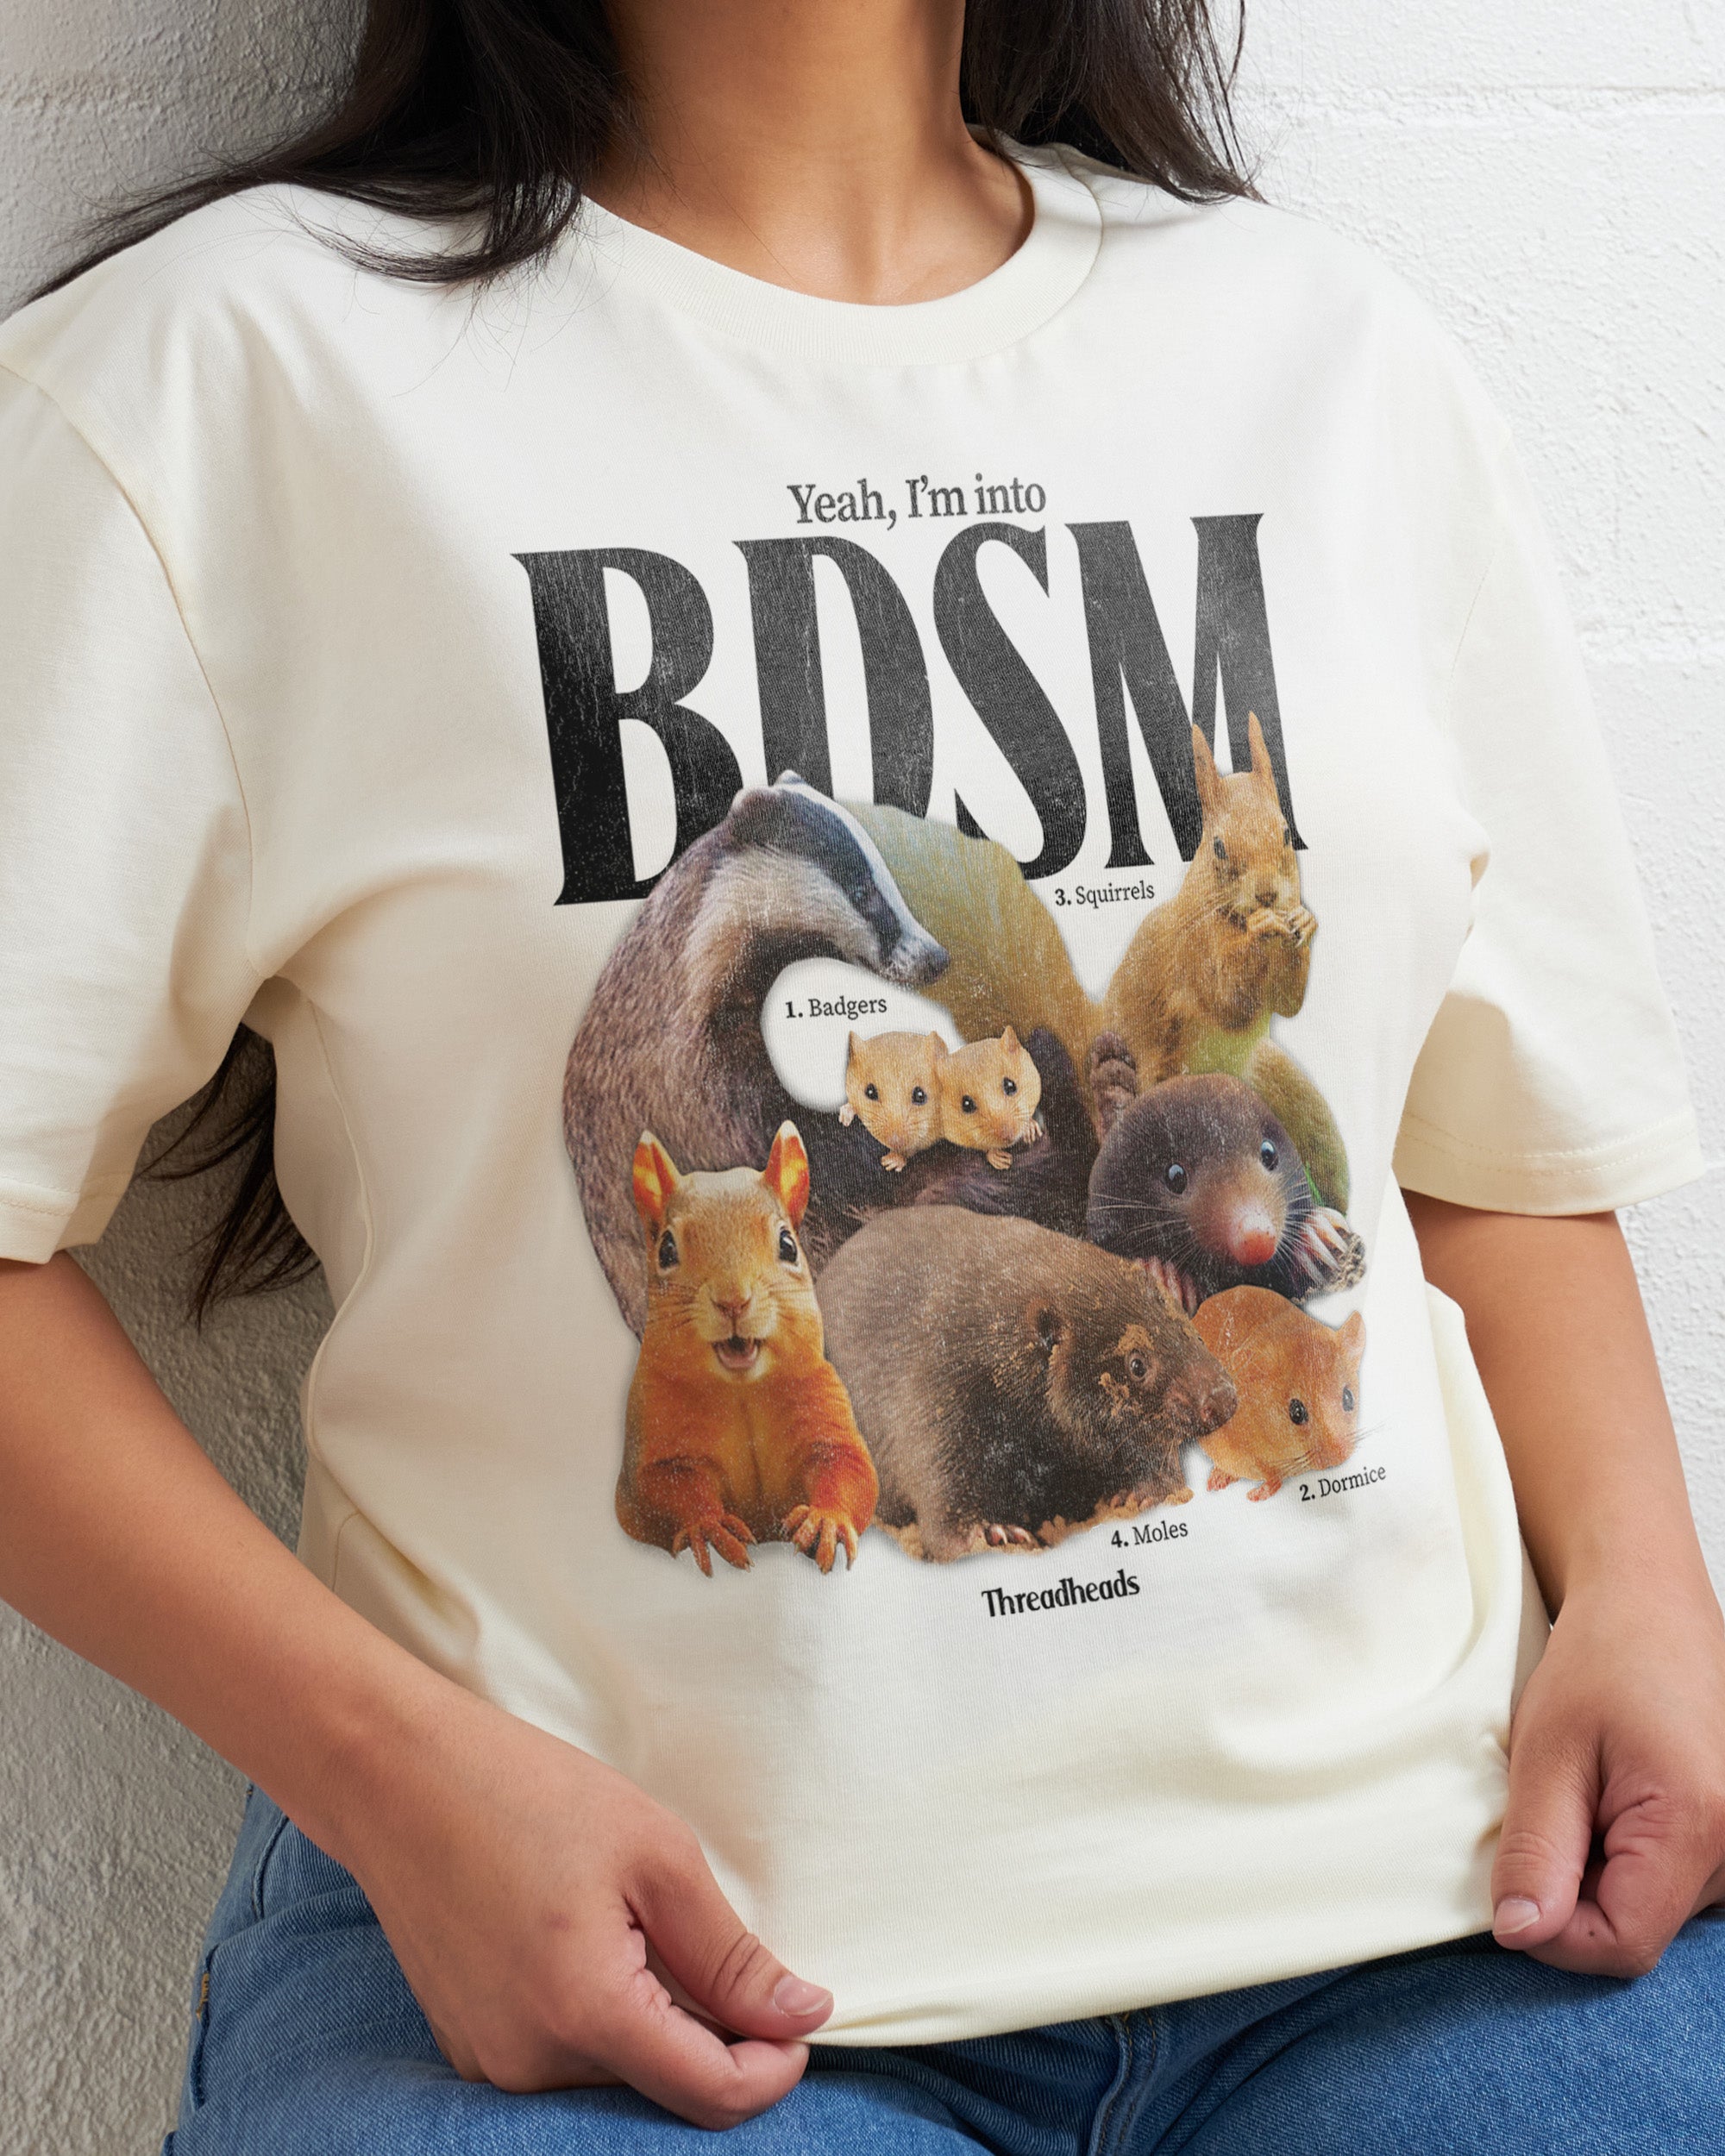 BDSM T-Shirt Australia Online